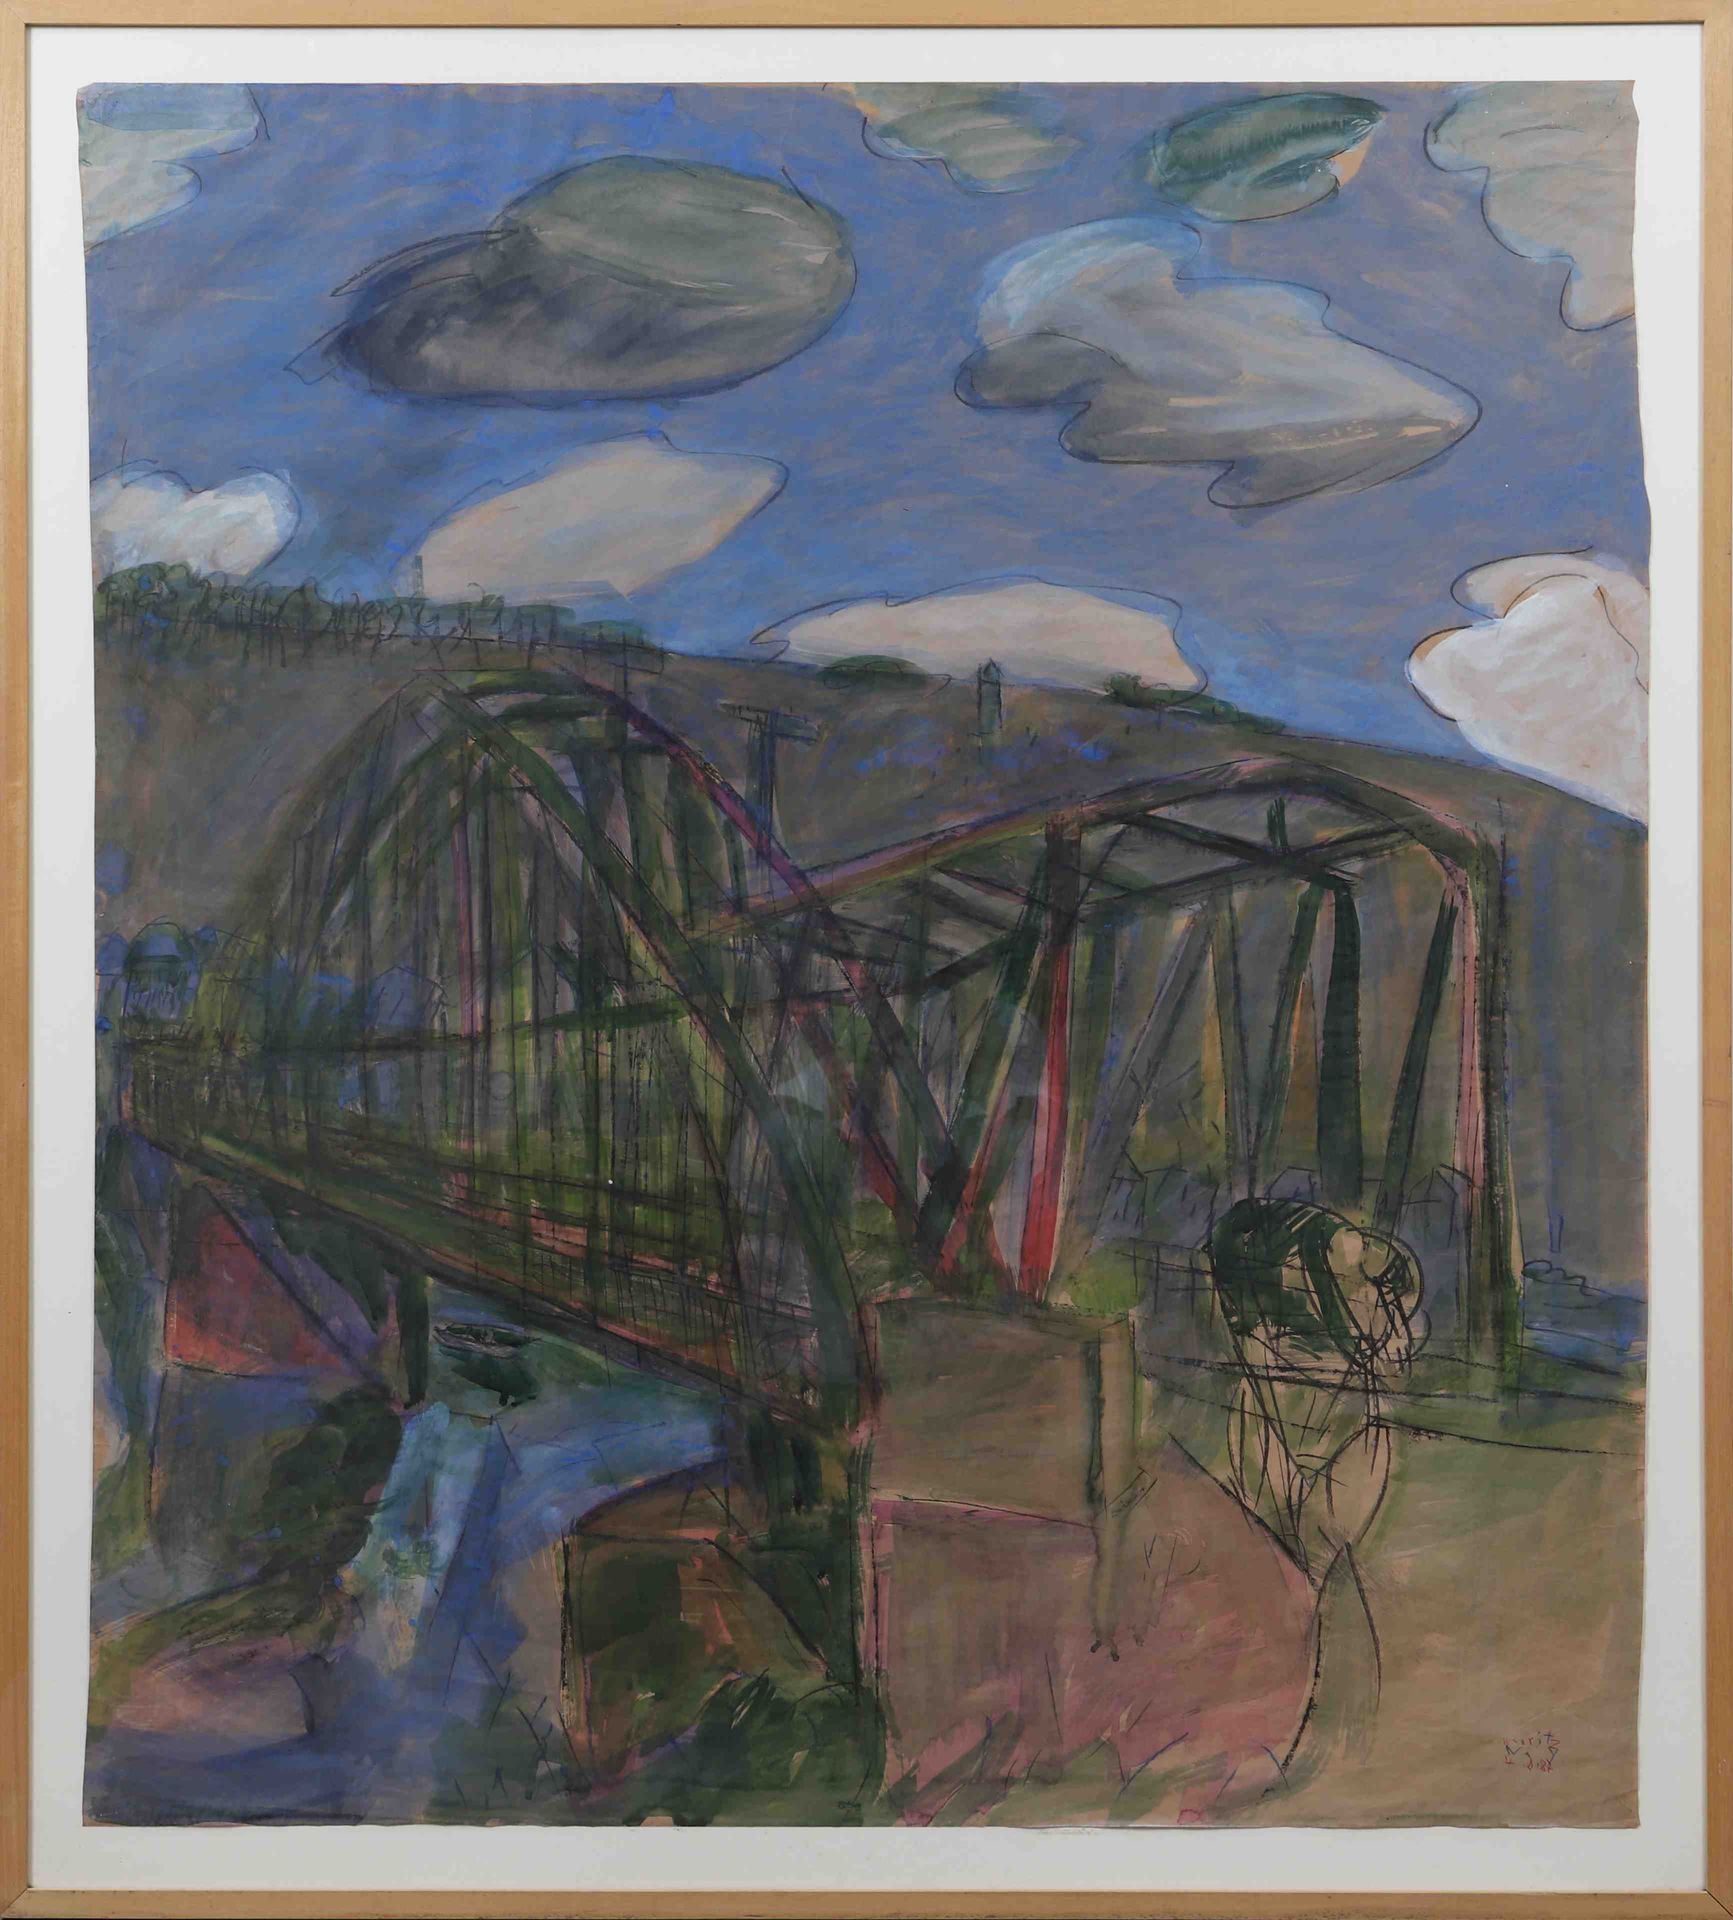 Null 莫里茨-内伊（生于1947年）《桥 
卢森堡画家 
纸上水粉画，已签名并注明日期4.08.1987 
目测尺寸：高：119；宽：106厘米